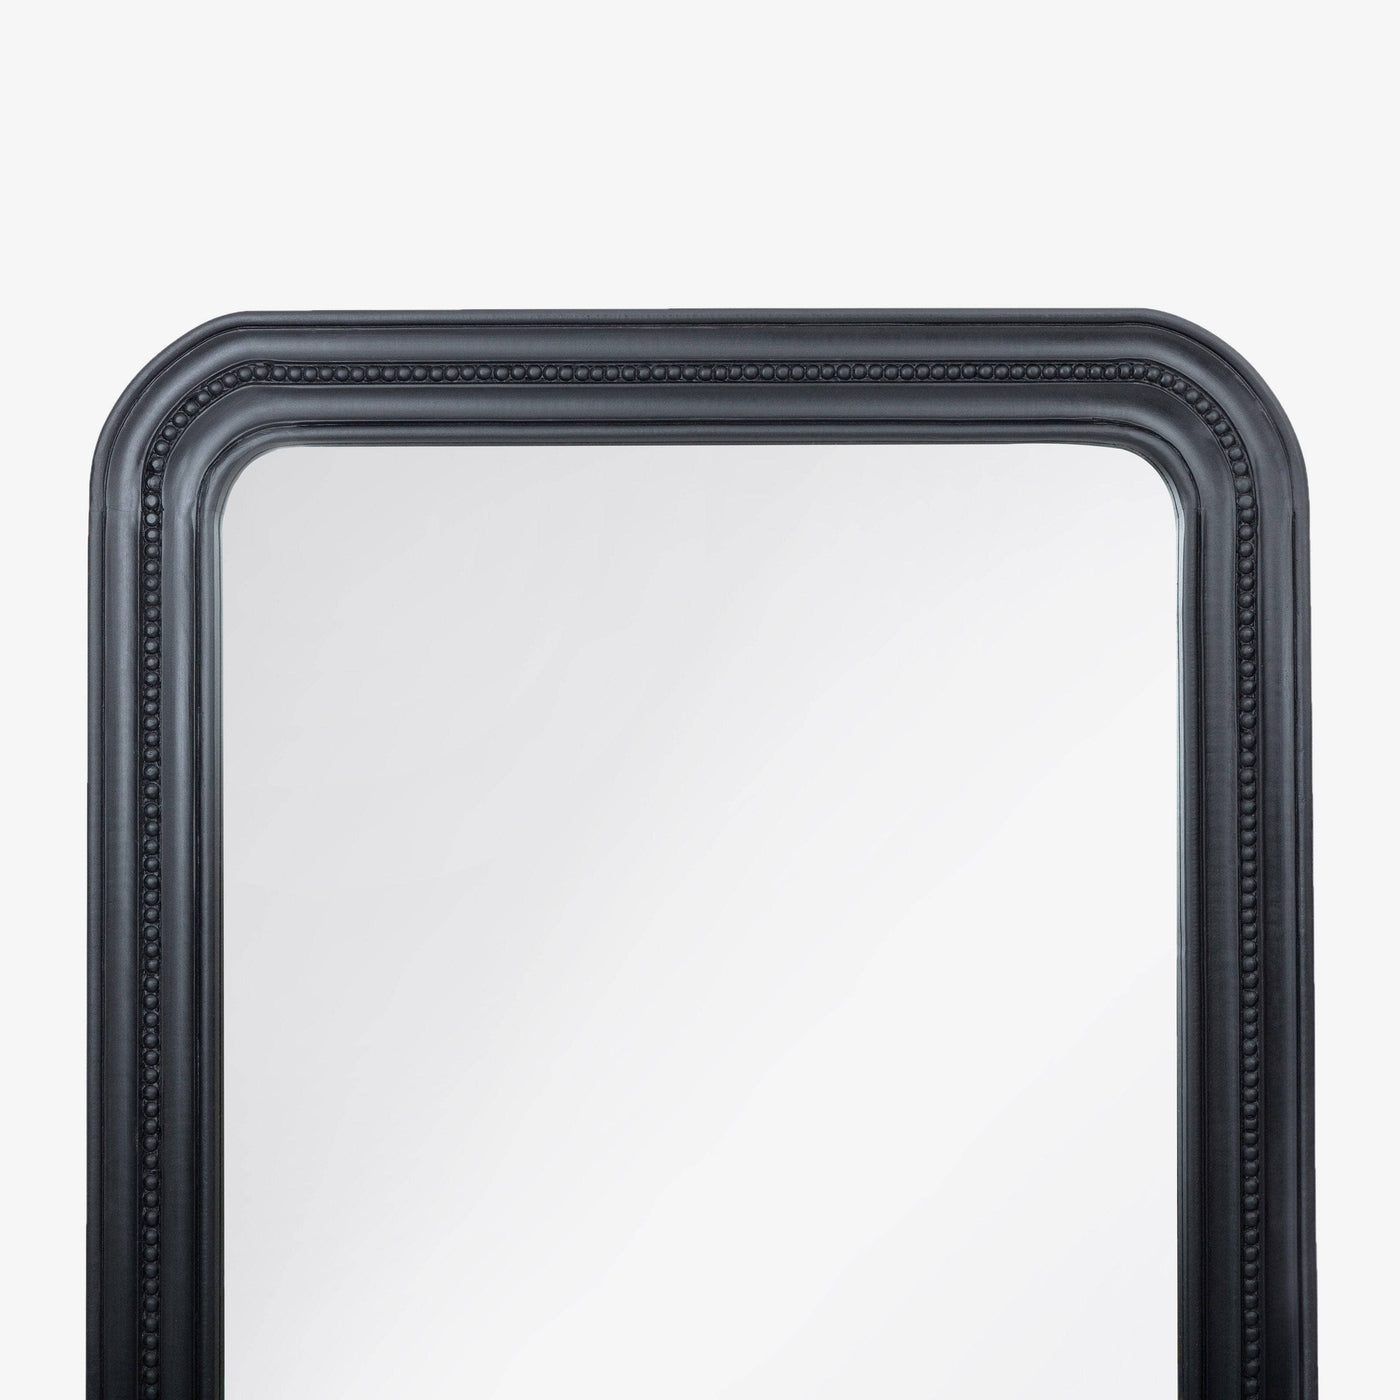 Nuito Wooden Floor Mirror, Black, 90x190 cm Mirrors sazy.com